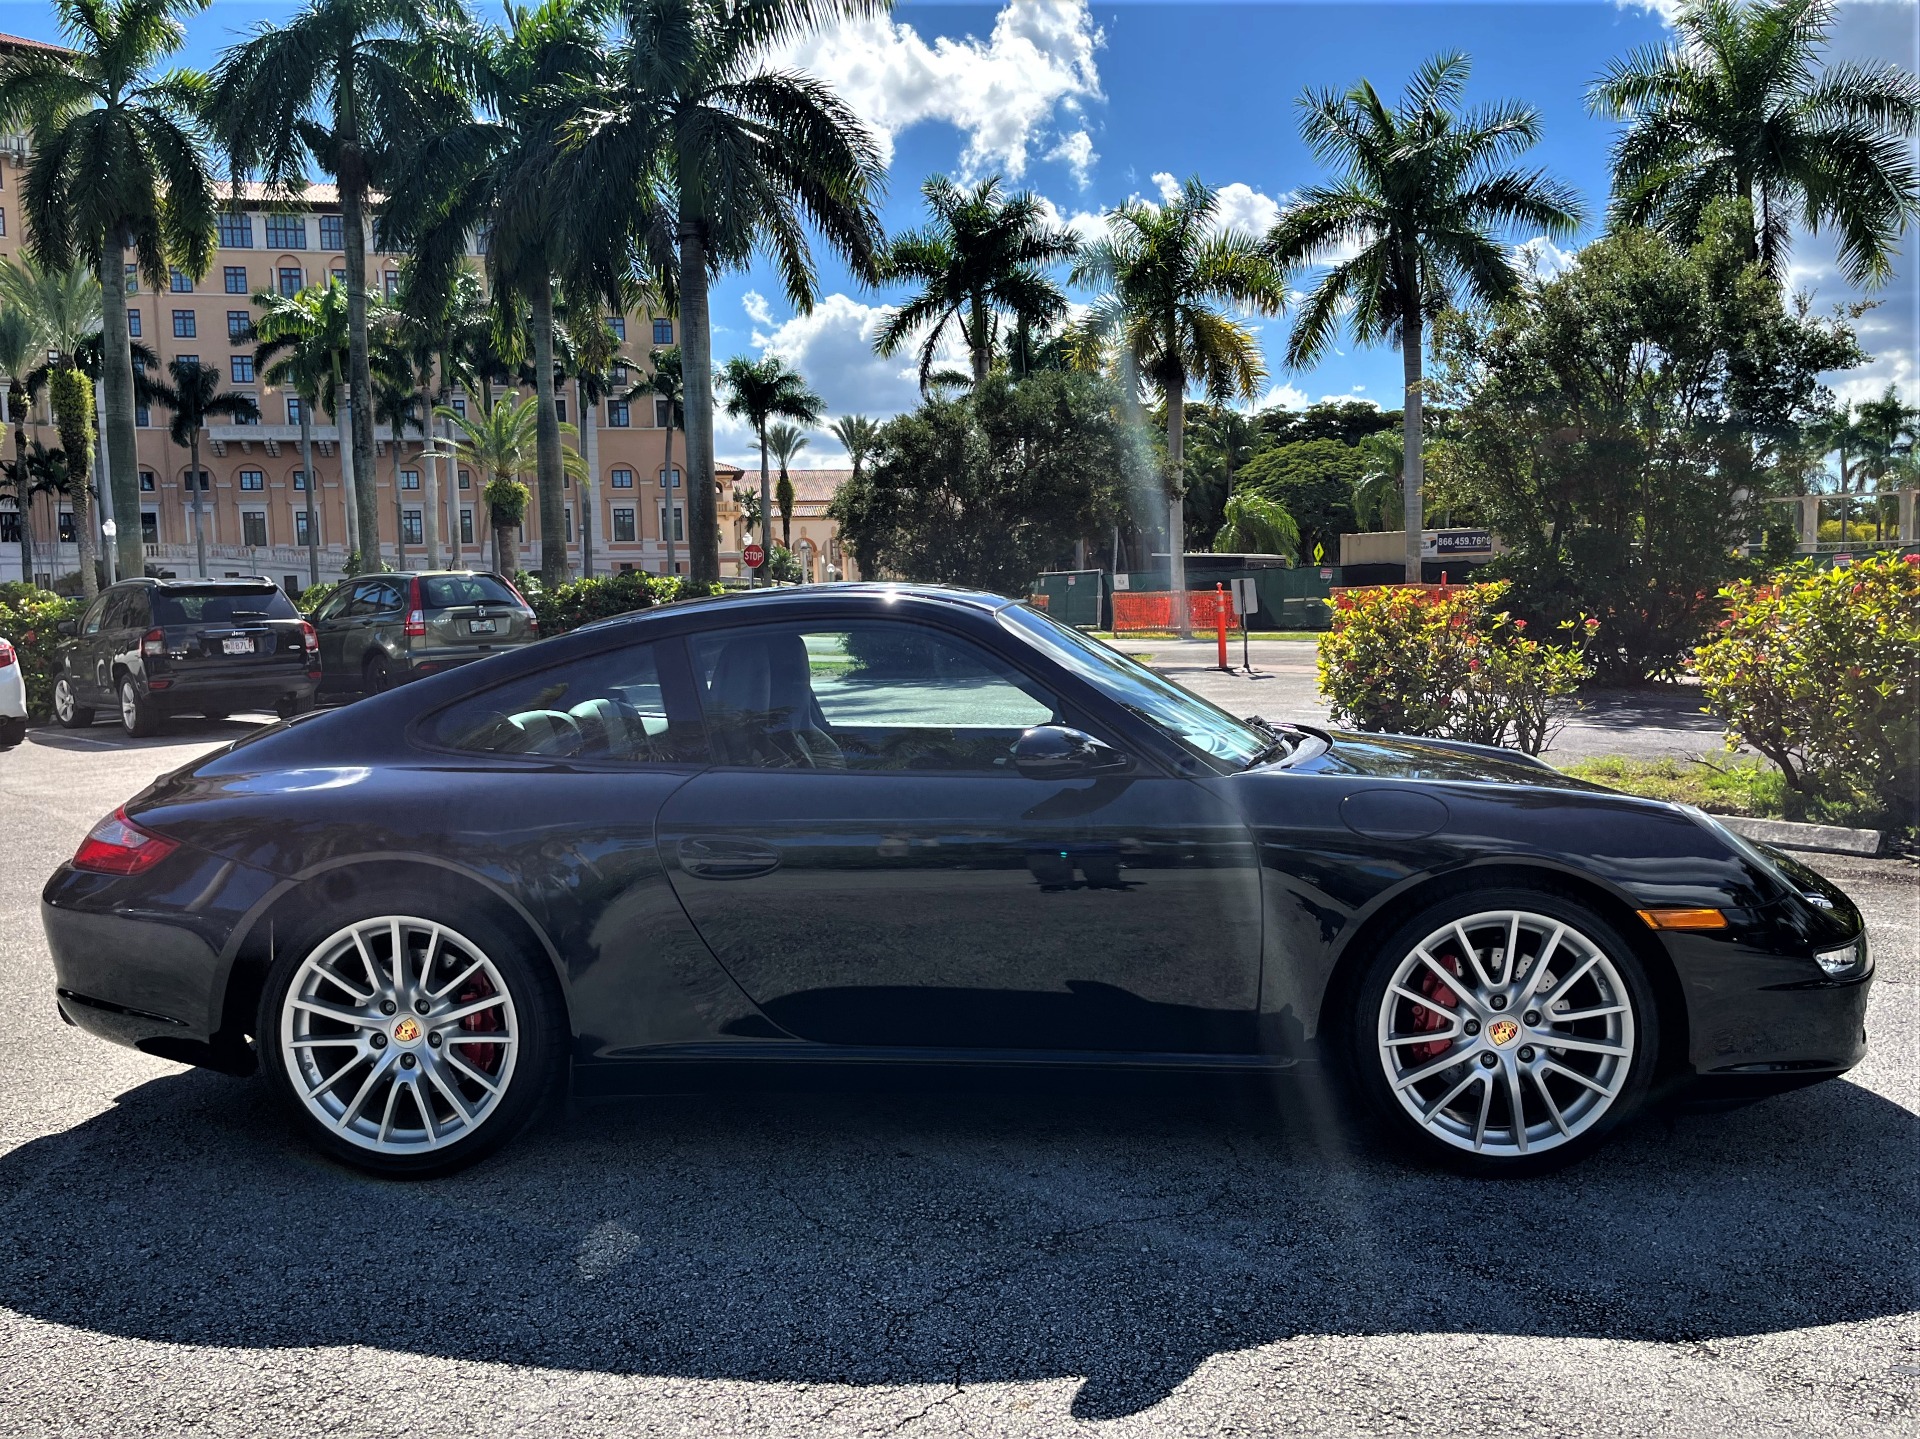 Used 2007 Porsche 911 Carrera S for sale $63,850 at The Gables Sports Cars in Miami FL 33146 2